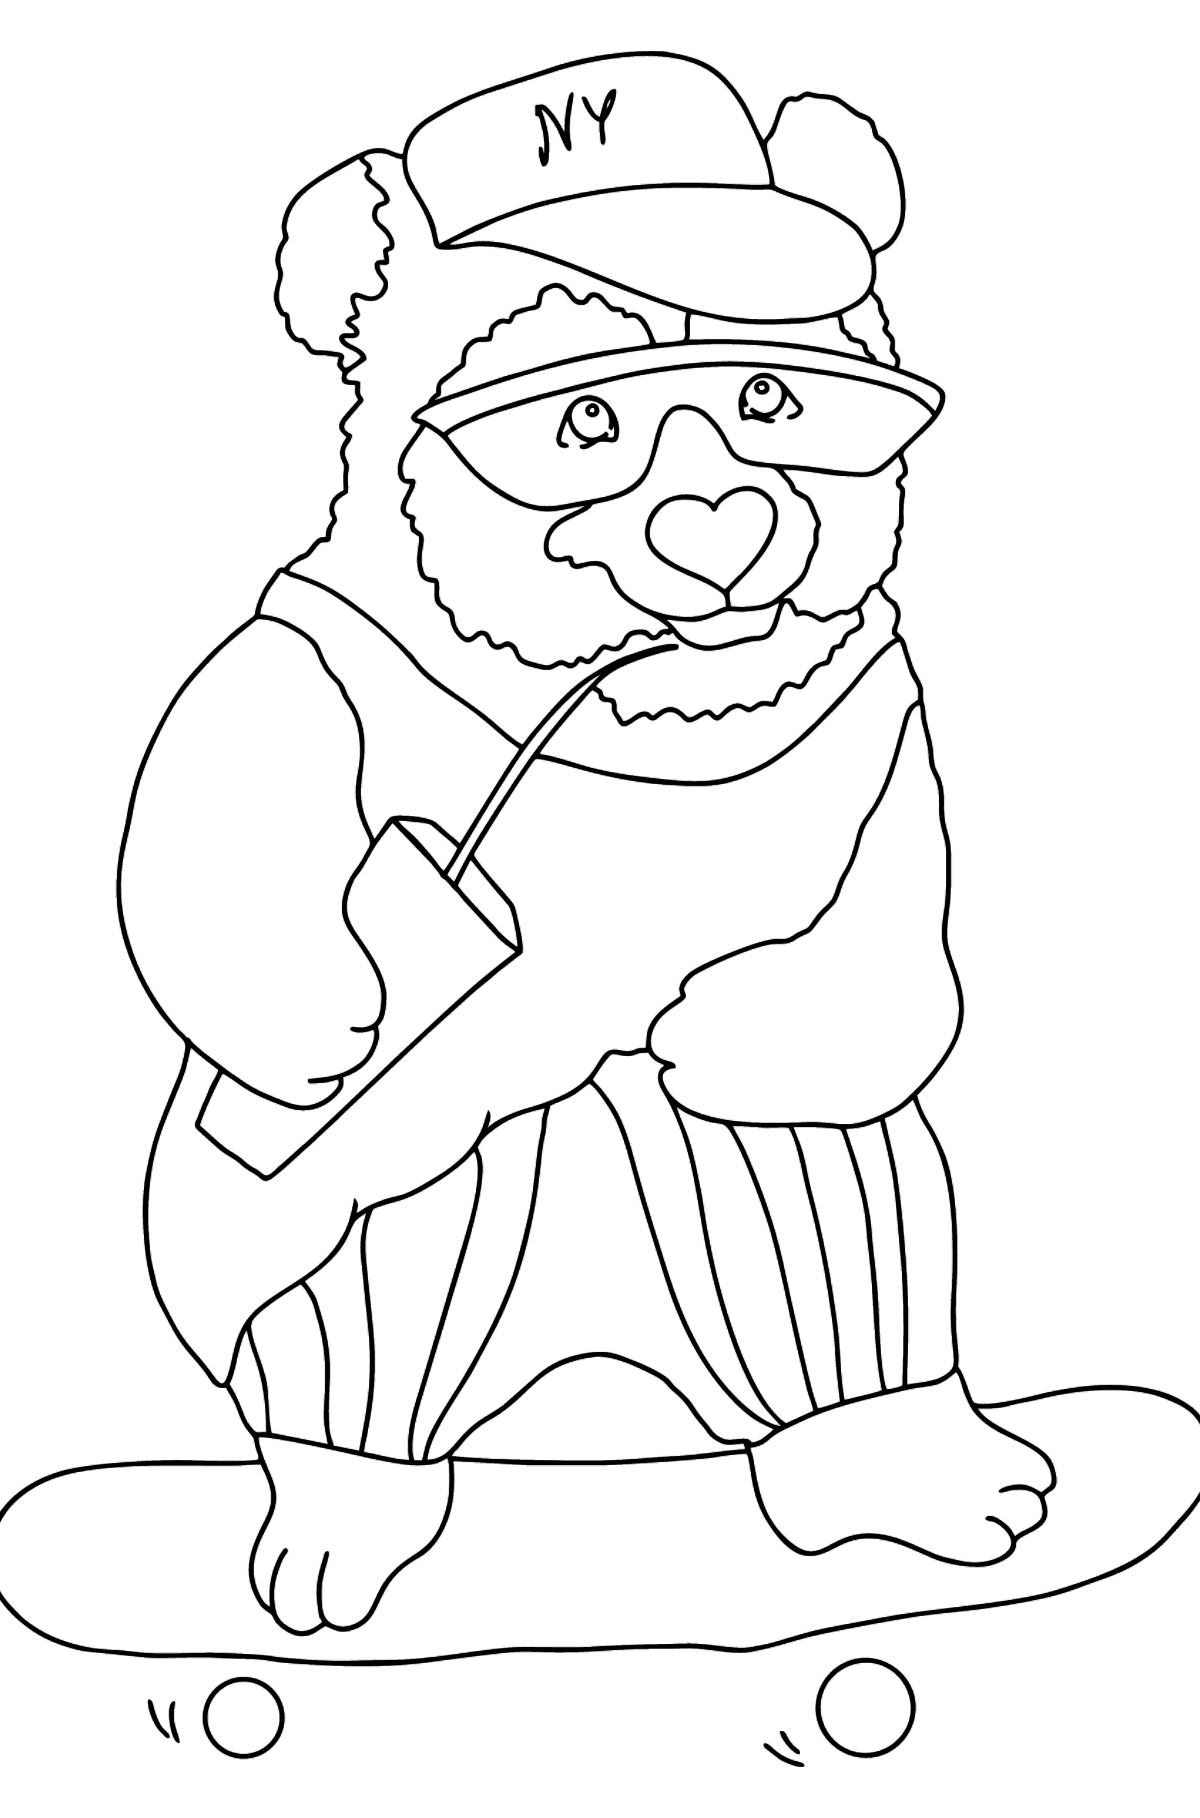 Розмальовка Весела панда (складно) - Розмальовки для дітей